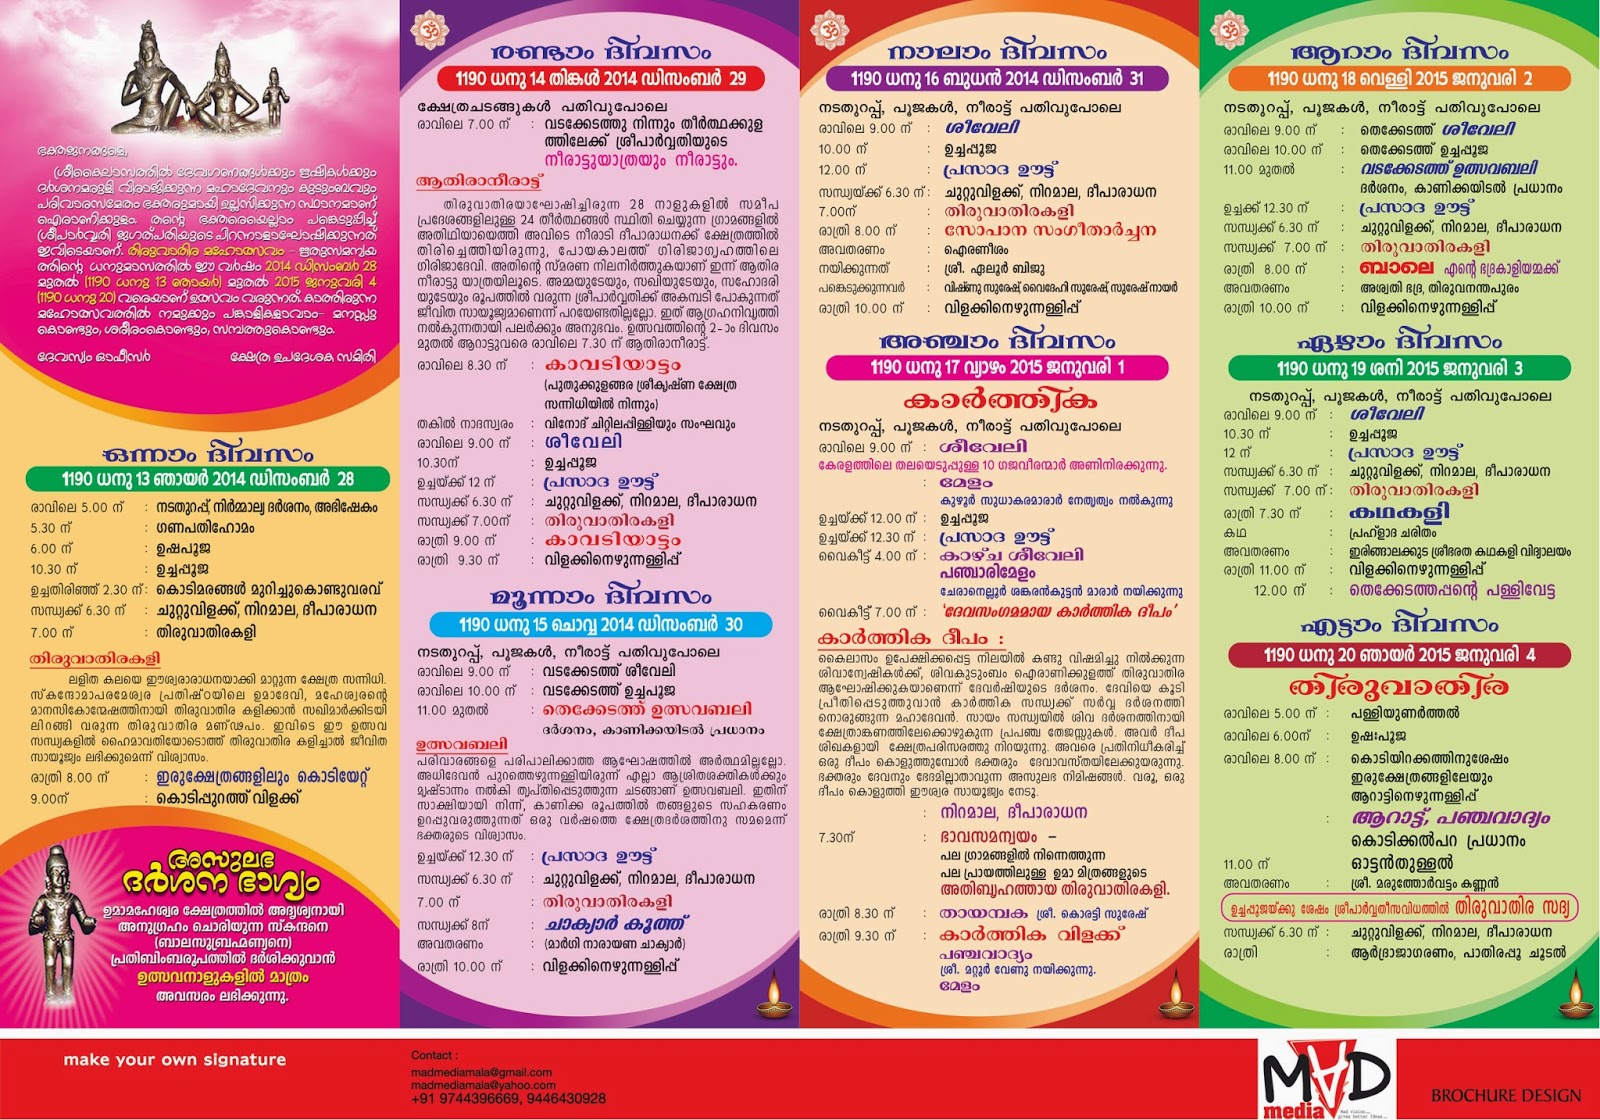 madmediamala: Iranikulam Temple Thiruvlsavam 2014 Notice